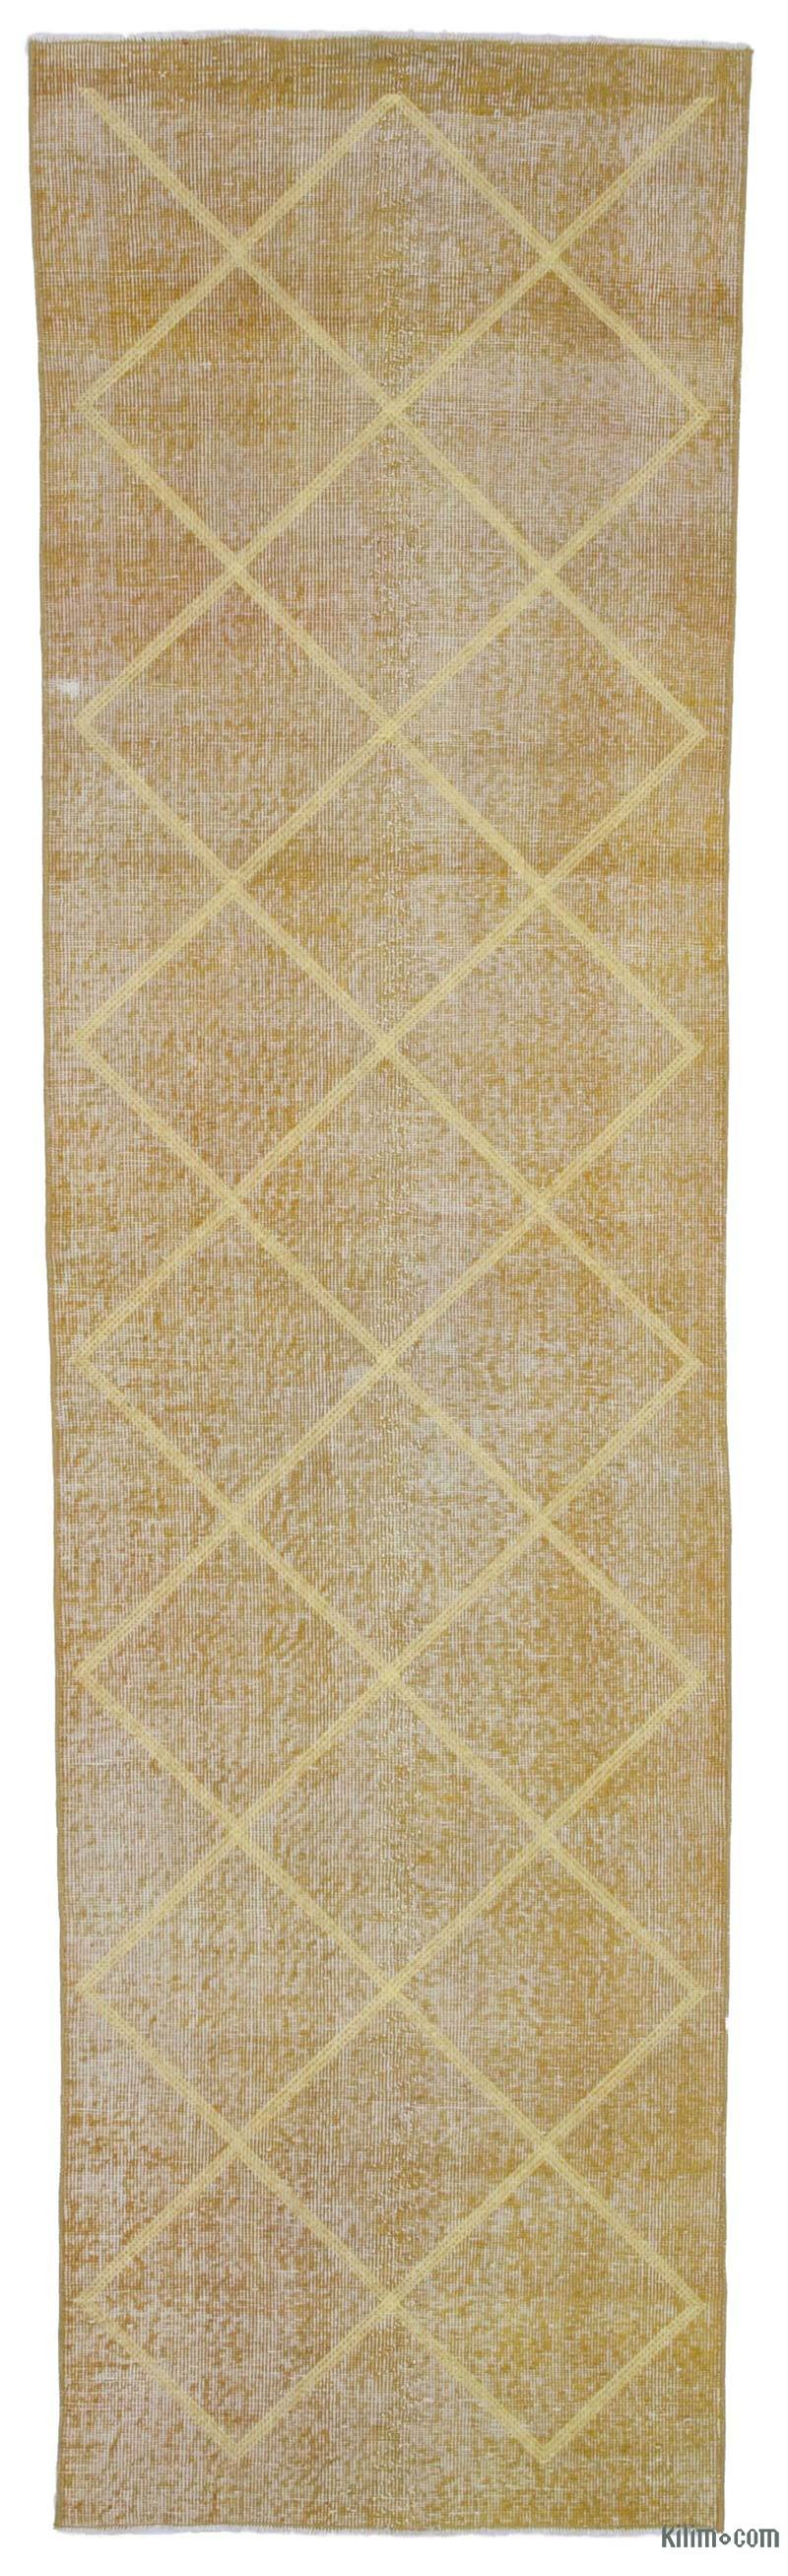 Amarillo Alfombra Turca bordada sobre teñida vintage - 90 cm x 316 cm - K0038606